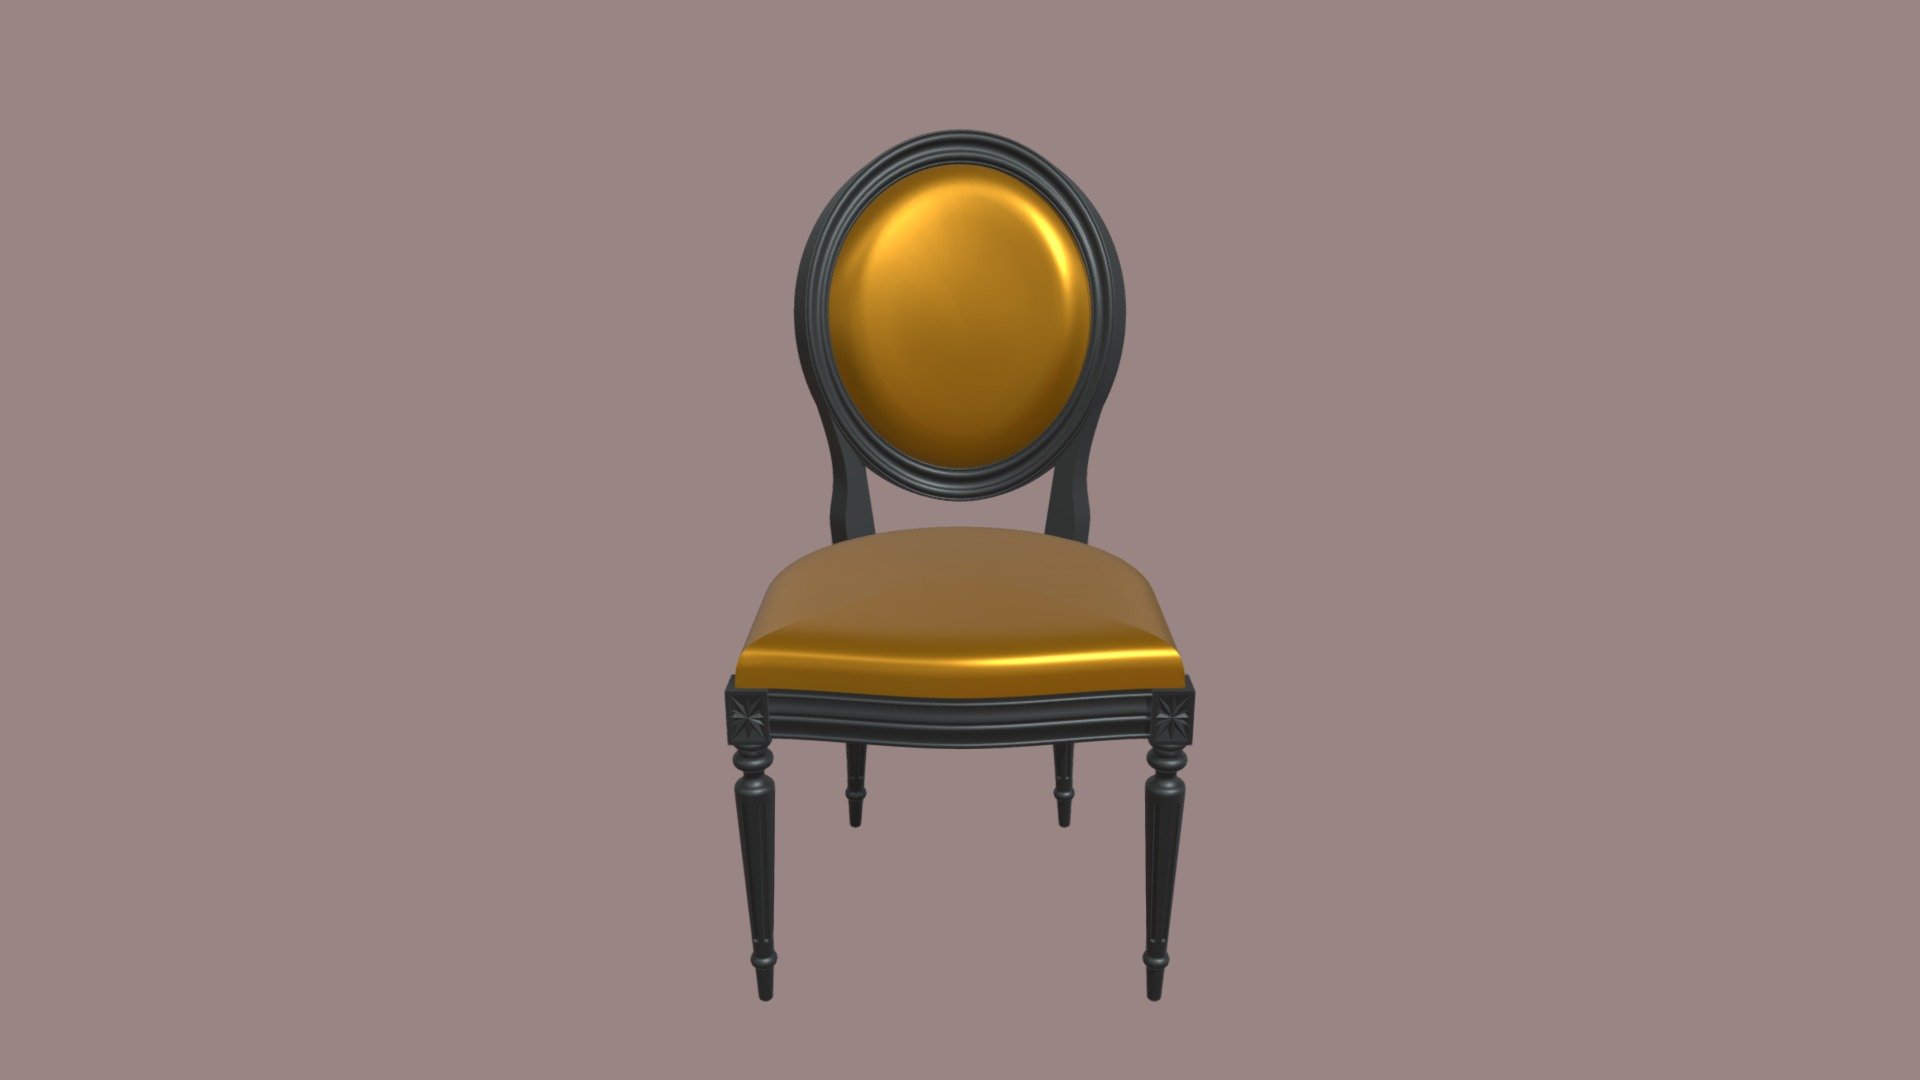 Medallion Classic Chair.
Louis XVI chair.
high quality model 3d model